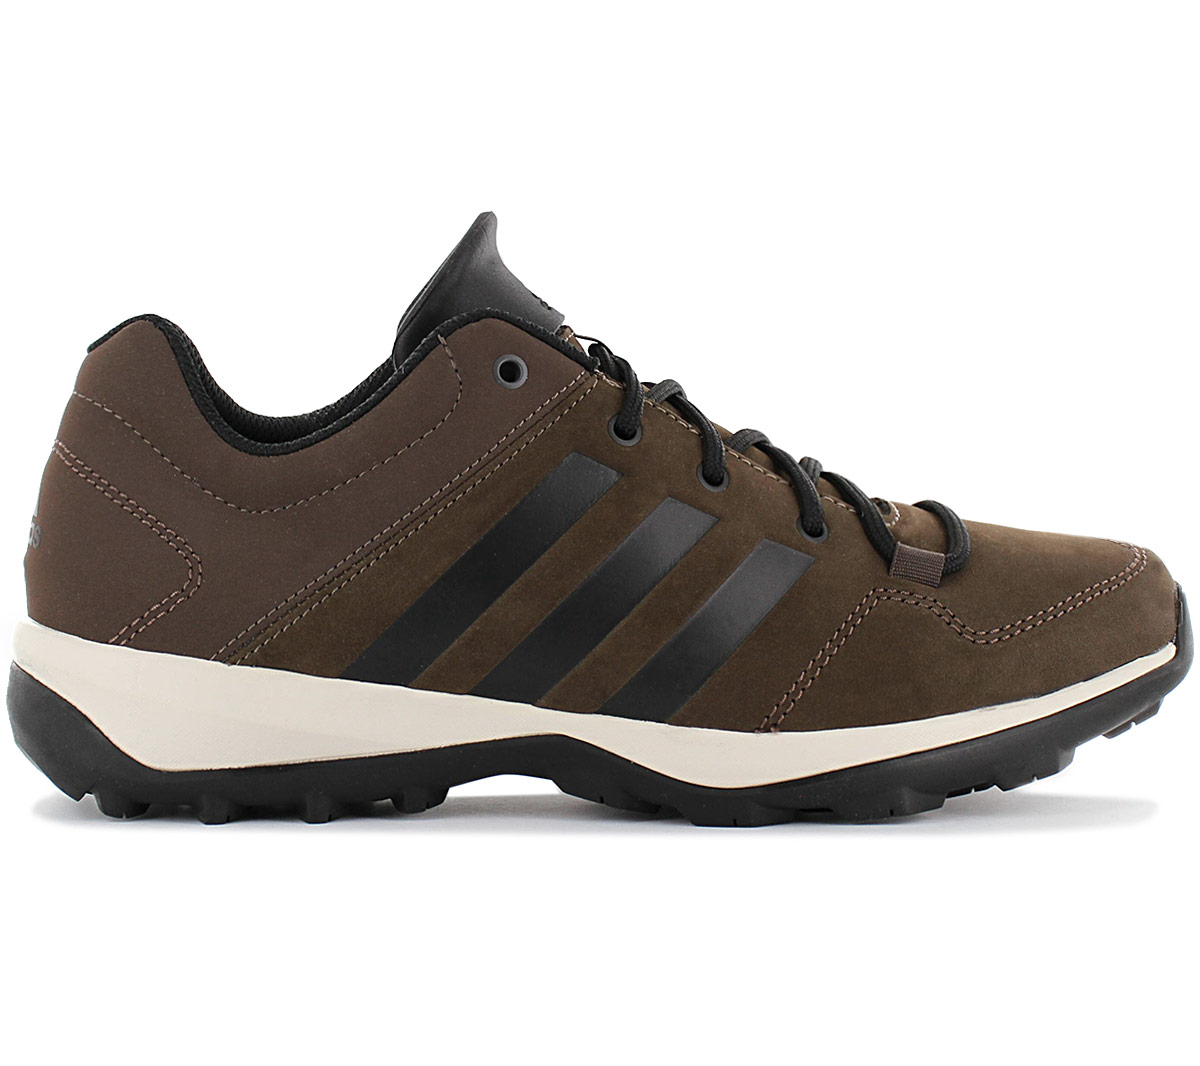 Adidas daroga plus Leather Men's Hiking Shoes B27270 Outdoor Trekking Shoes  | eBay